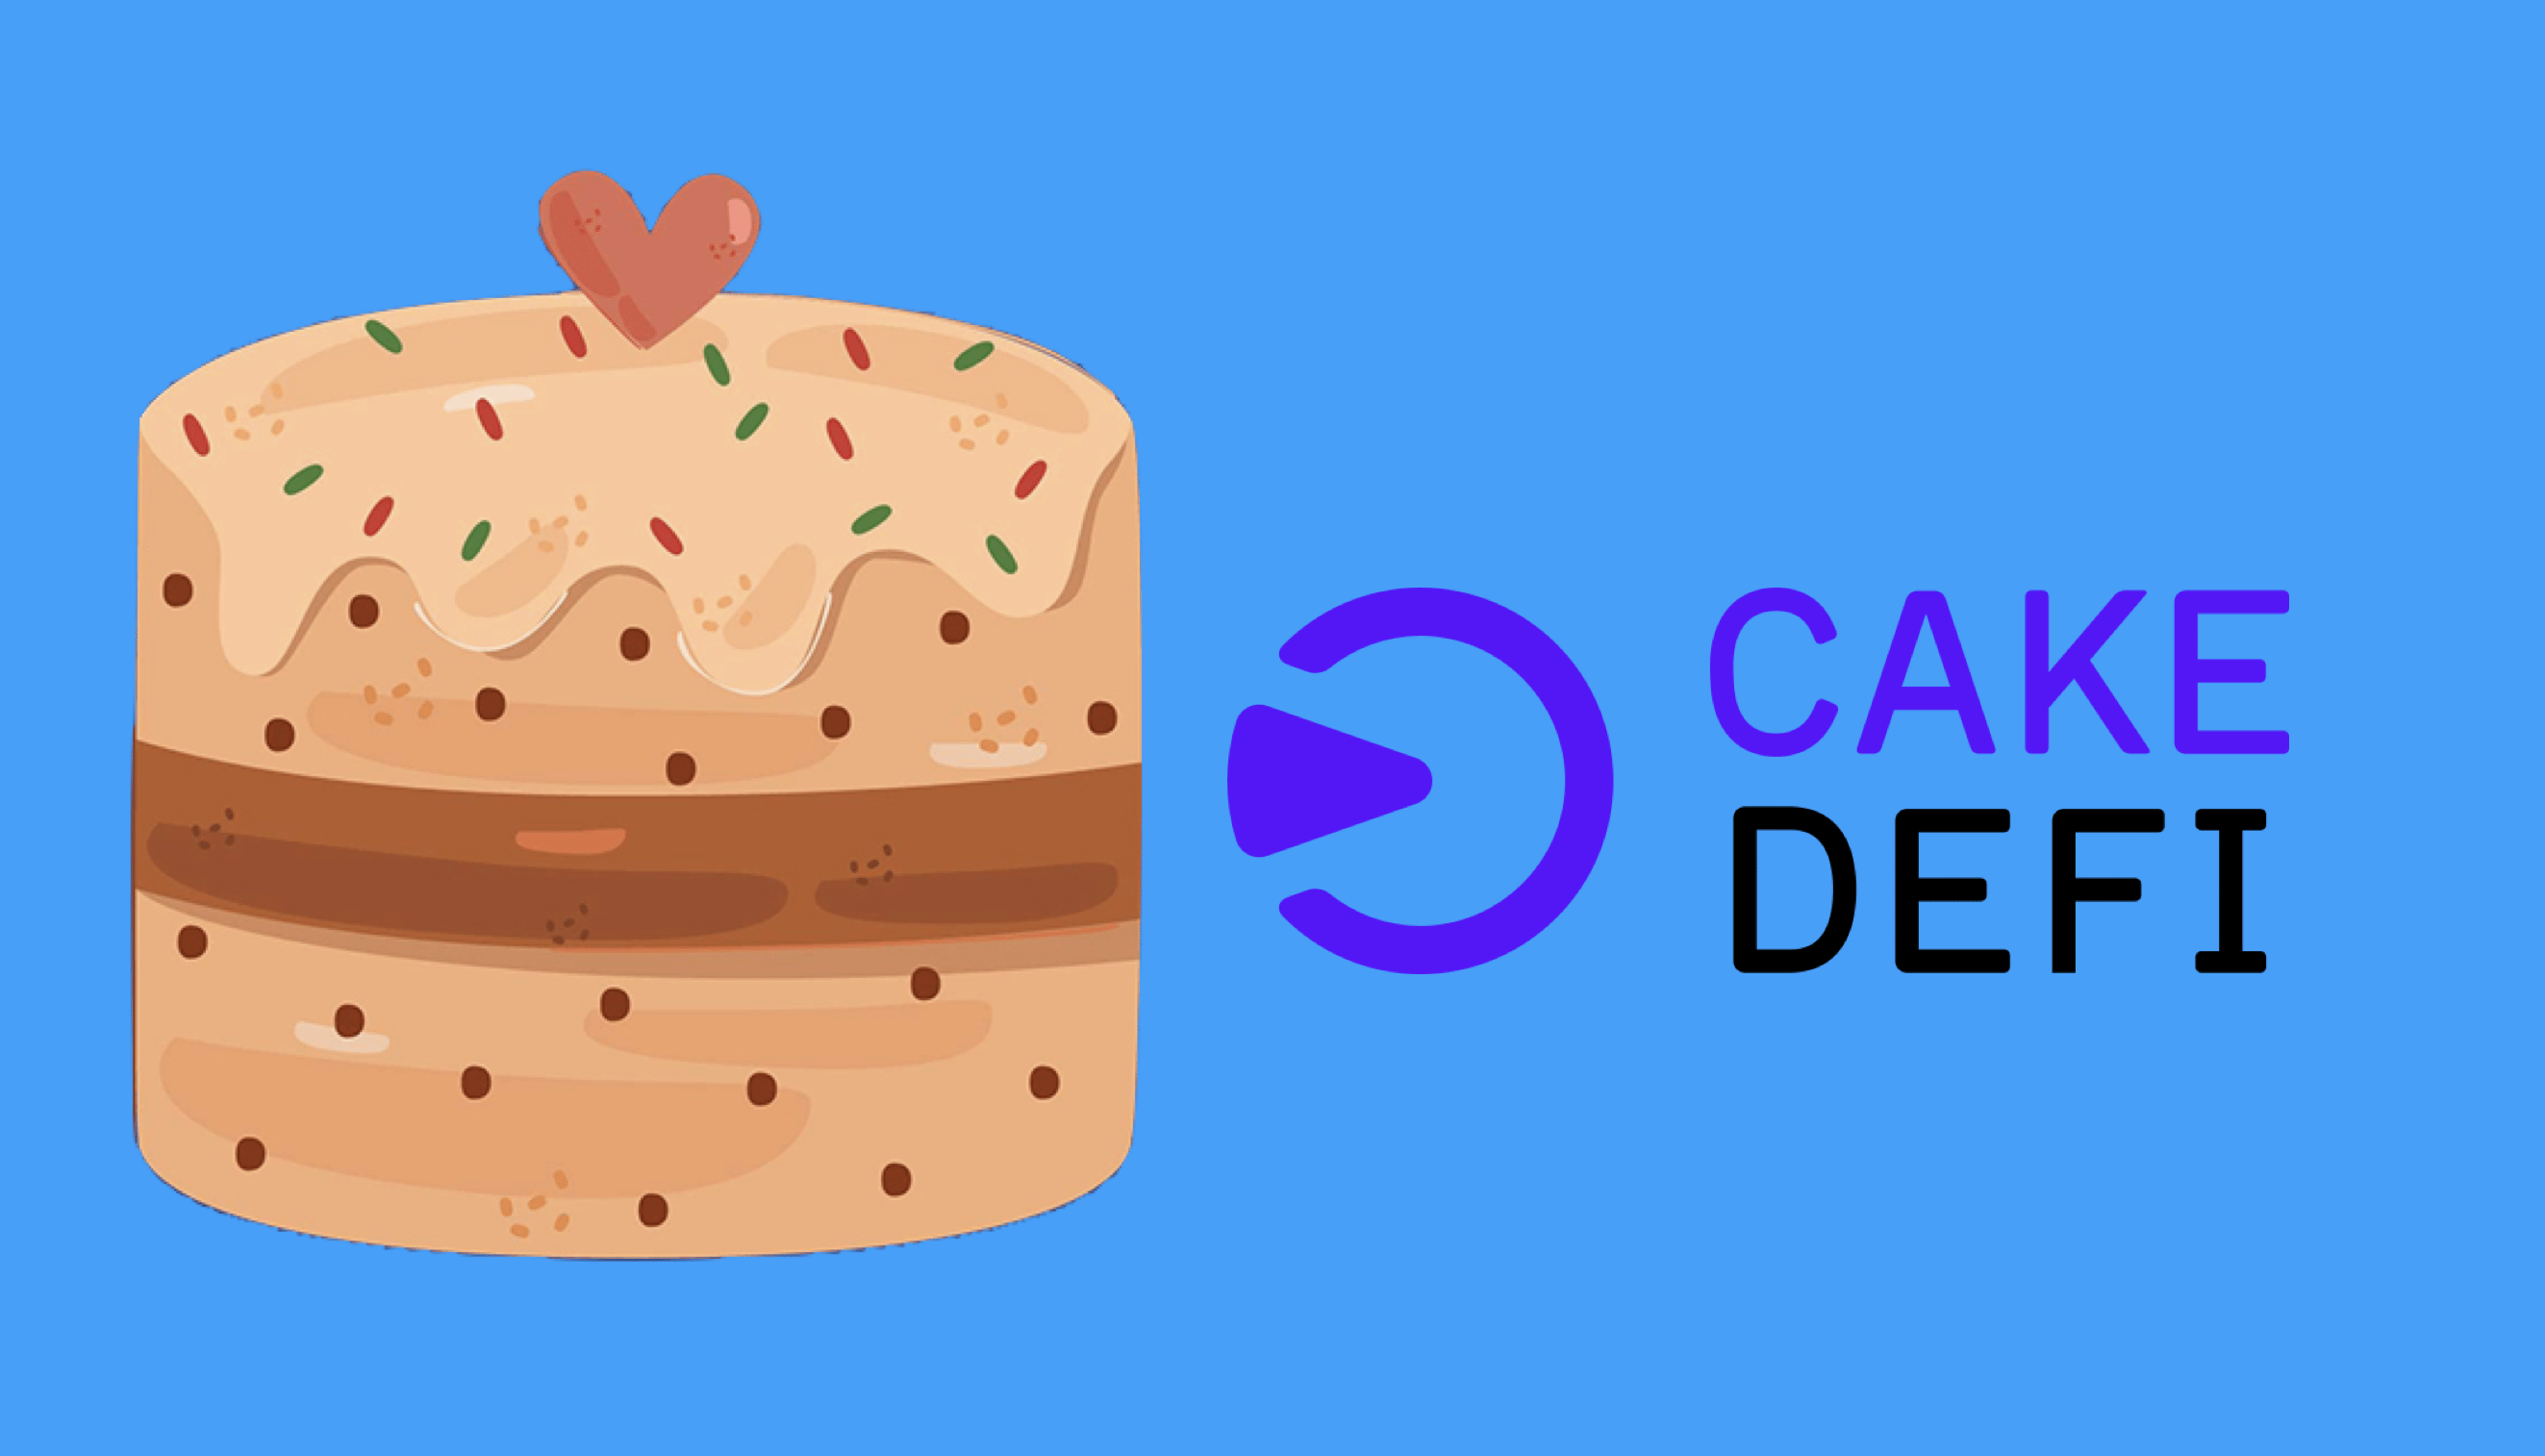 defi cake app
